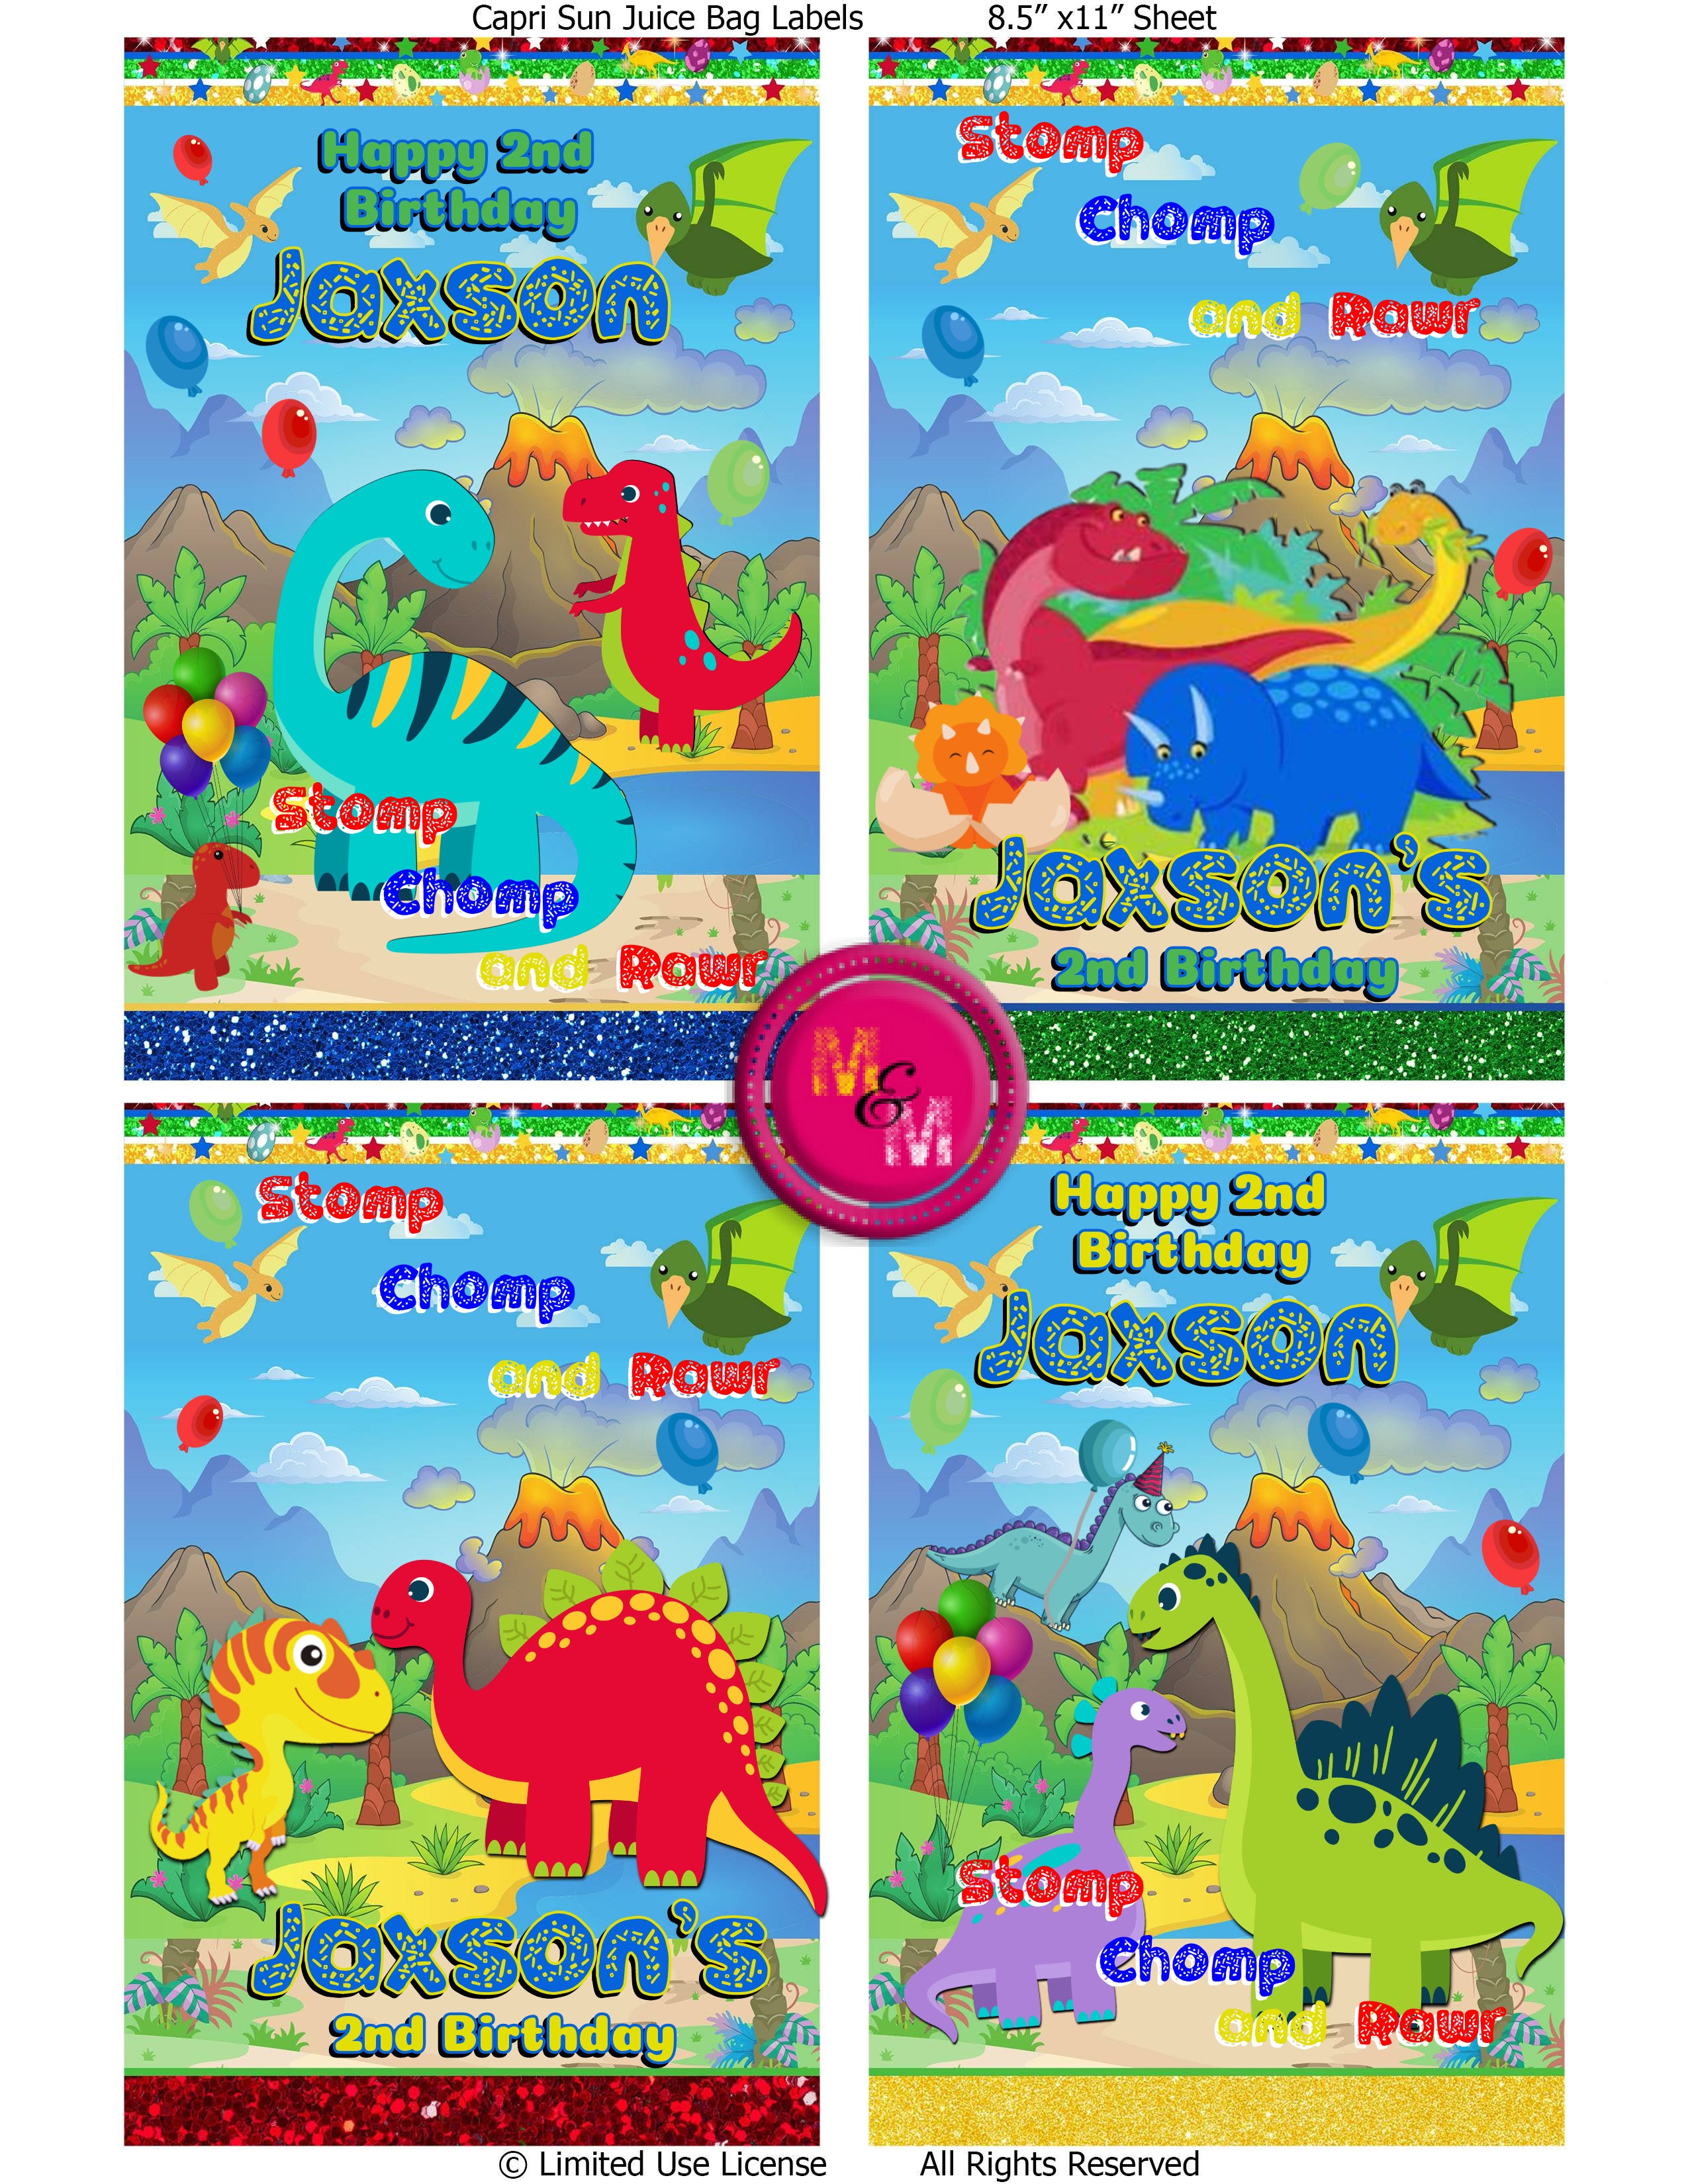 Editable Cute Dinosaur Chip Bag & Juice Pouch Set, Dinosaur Birthday Party Favors